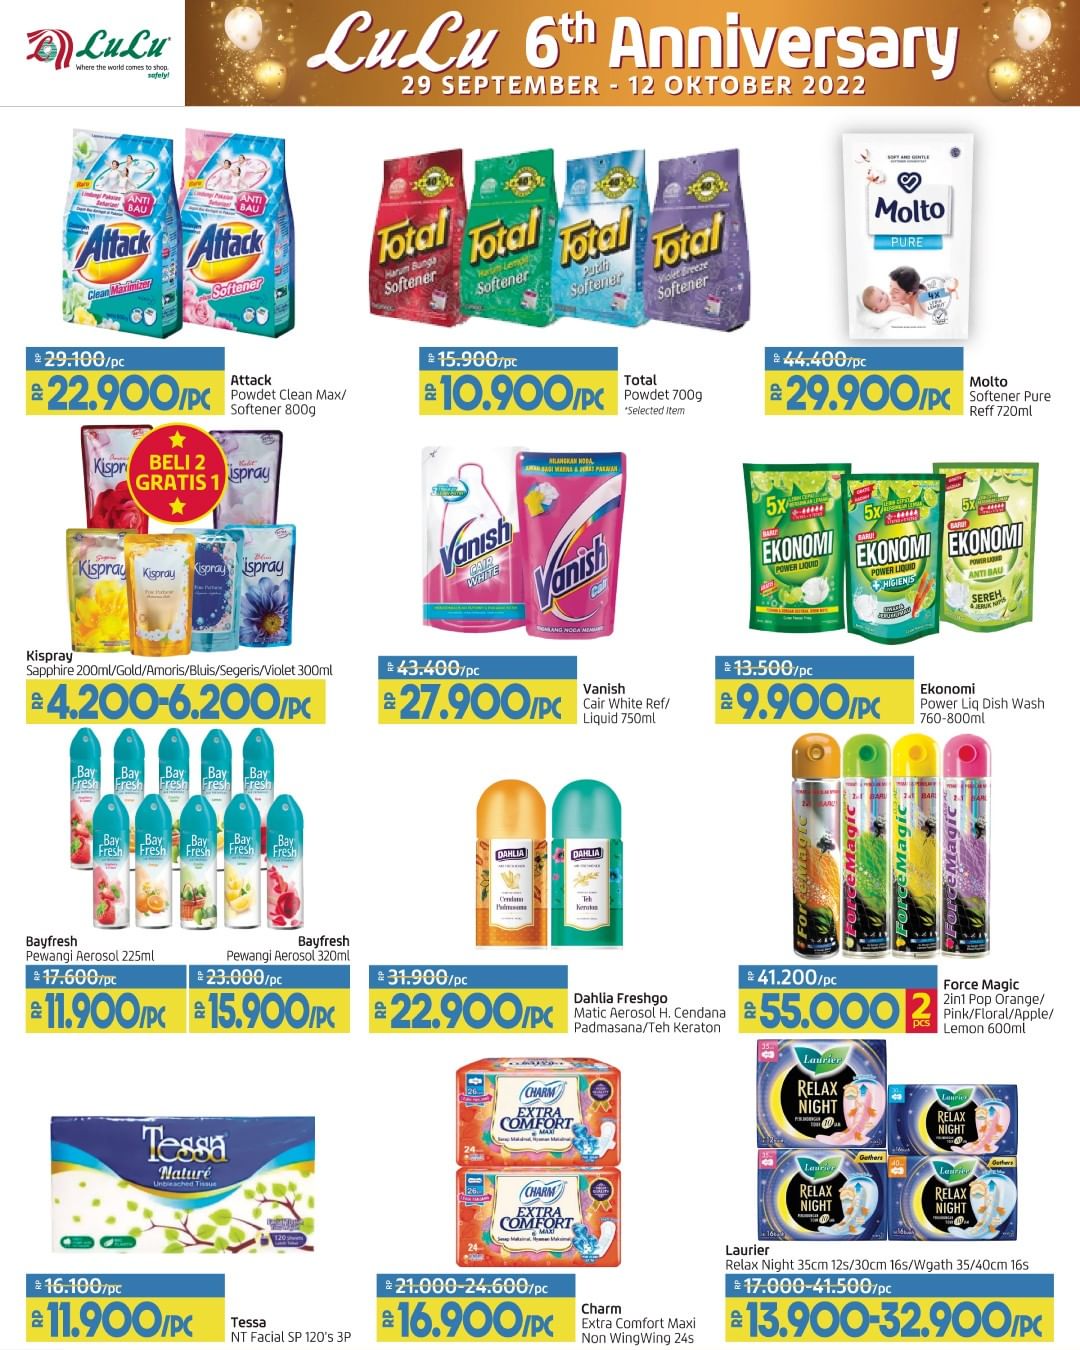 Katalog LuLu Hypermarket & Department Store 6th Anniversary! Belanja hemat HINGGA 50% periode 29 SEPTEMBER - 12 OKTOBER 2022